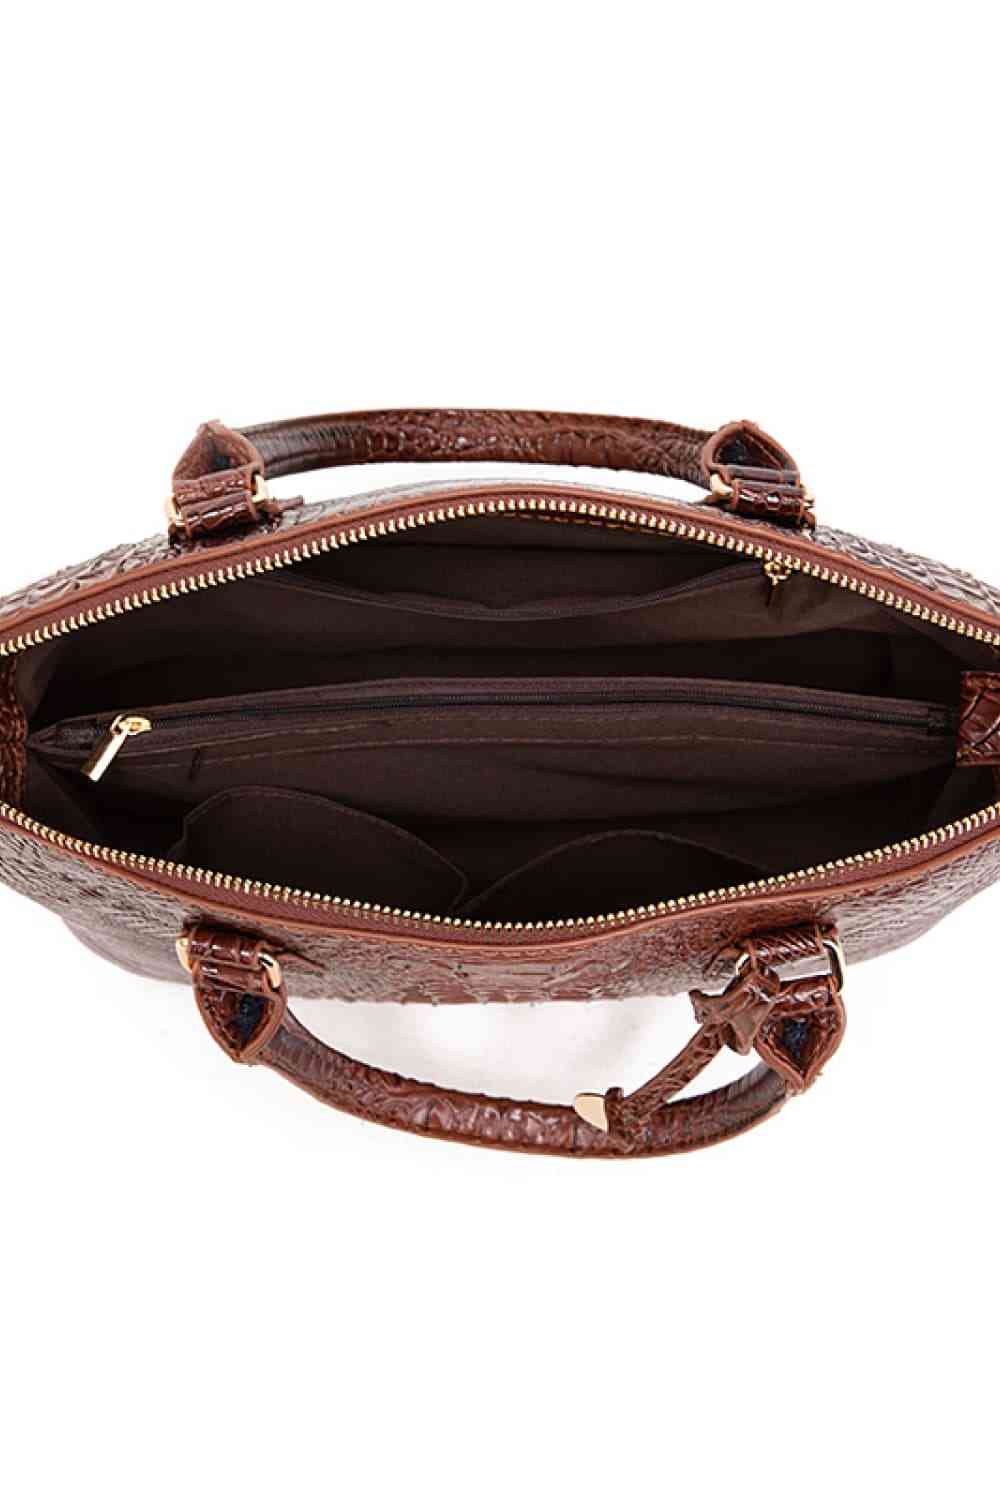 TEEK - Style Scheduler Handbag BAG TEEK Trend   